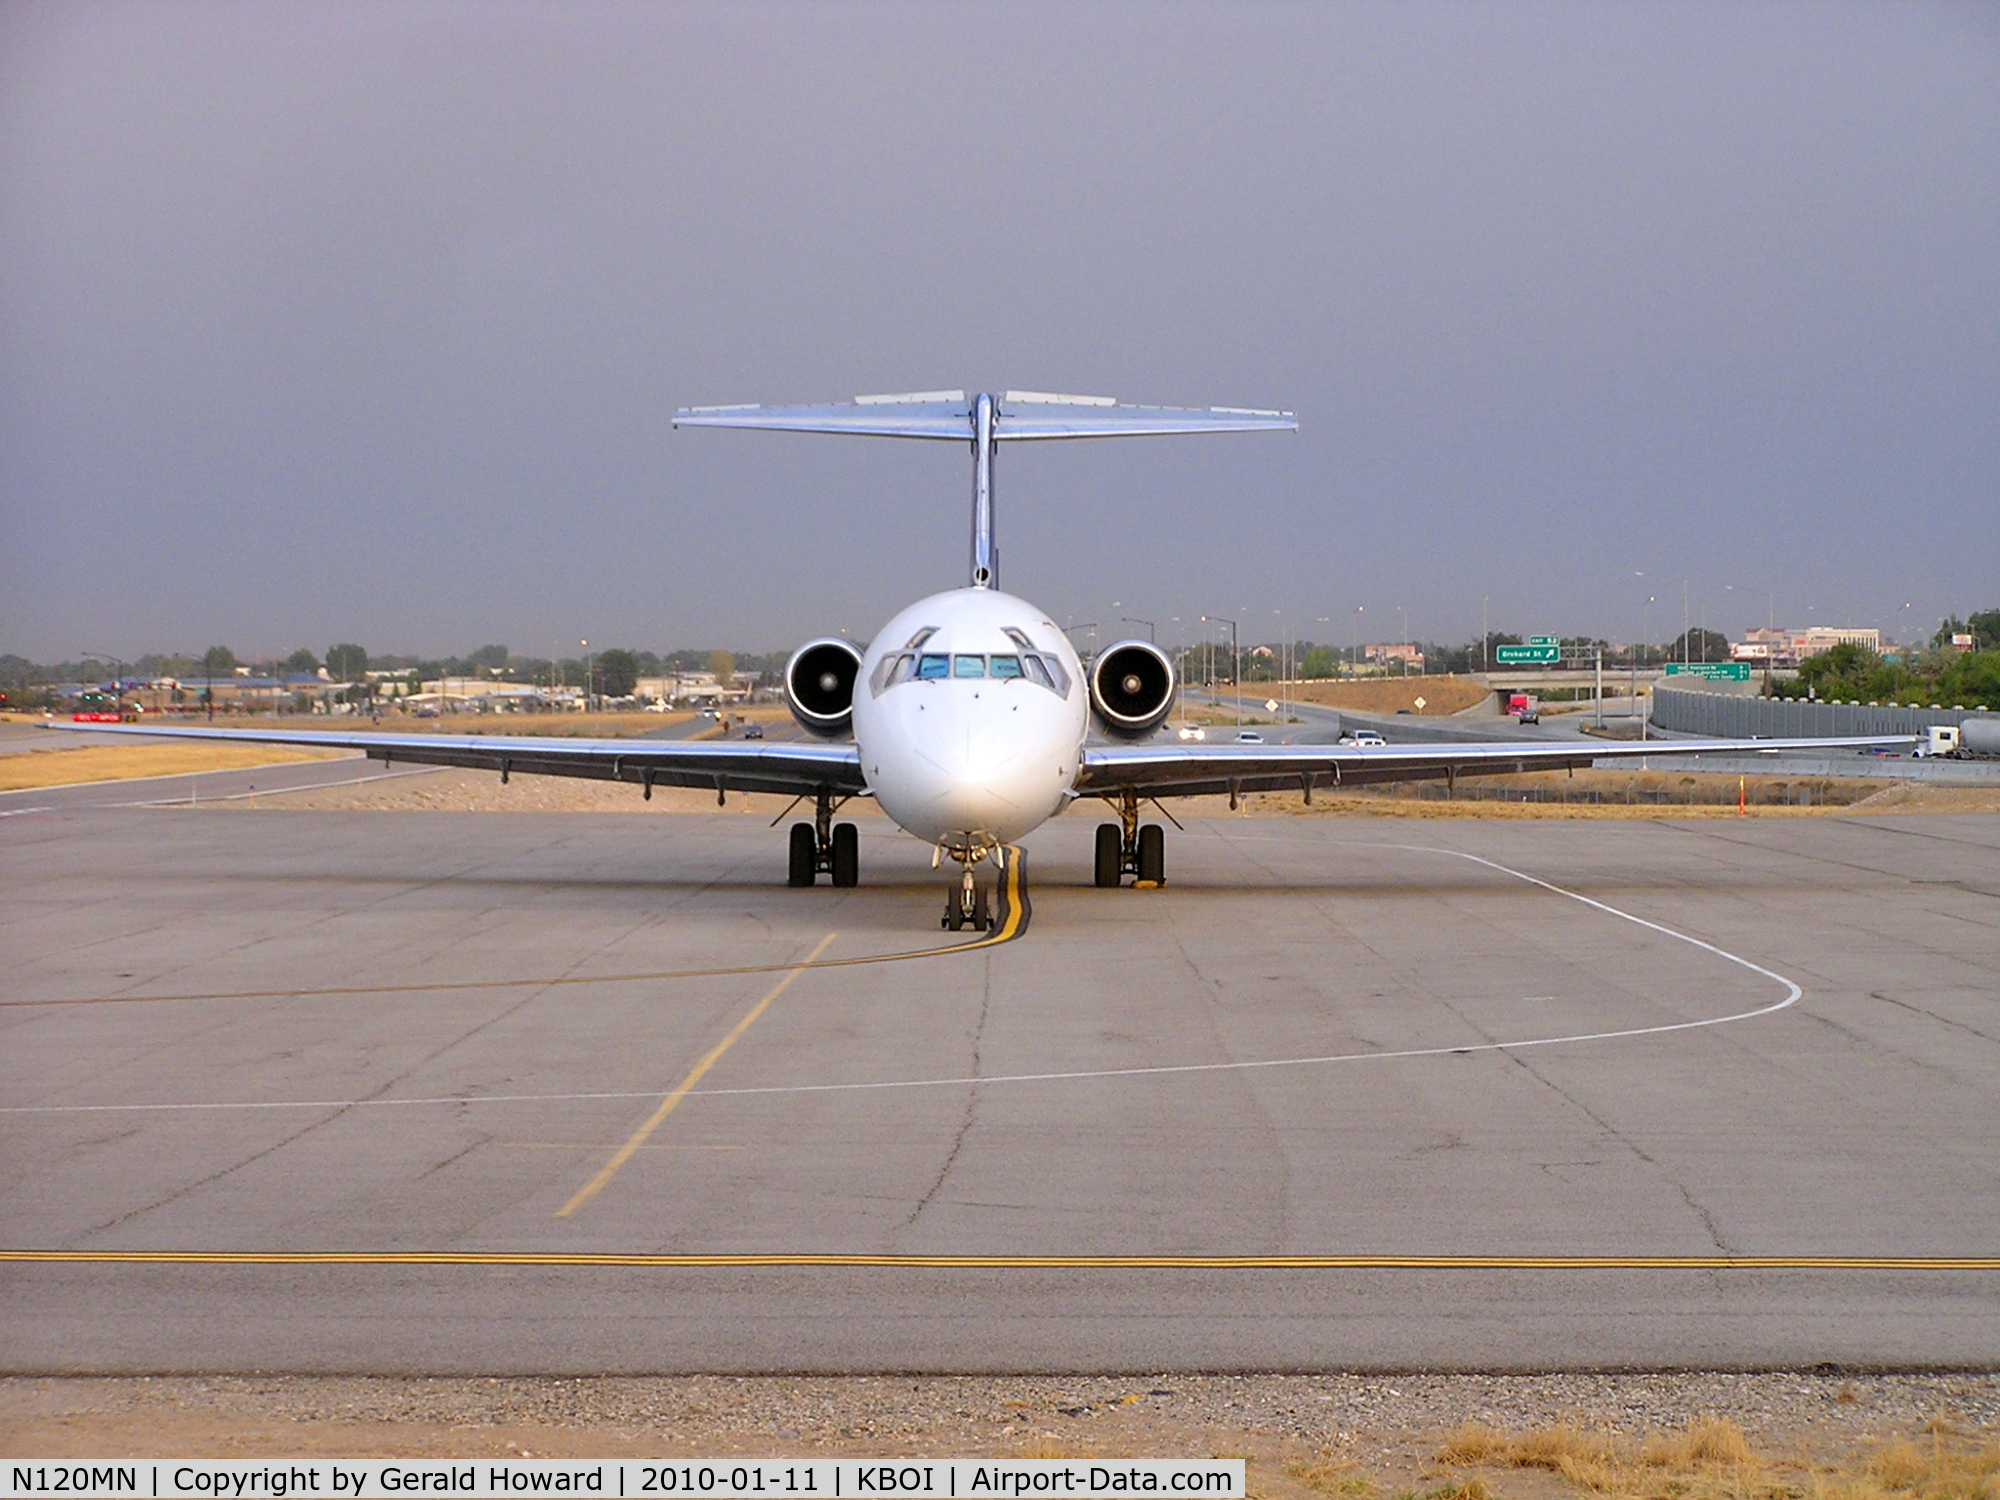 N120MN, 1992 McDonnell Douglas MD-83 C/N 53120, Old, but still a sleek aircraft.